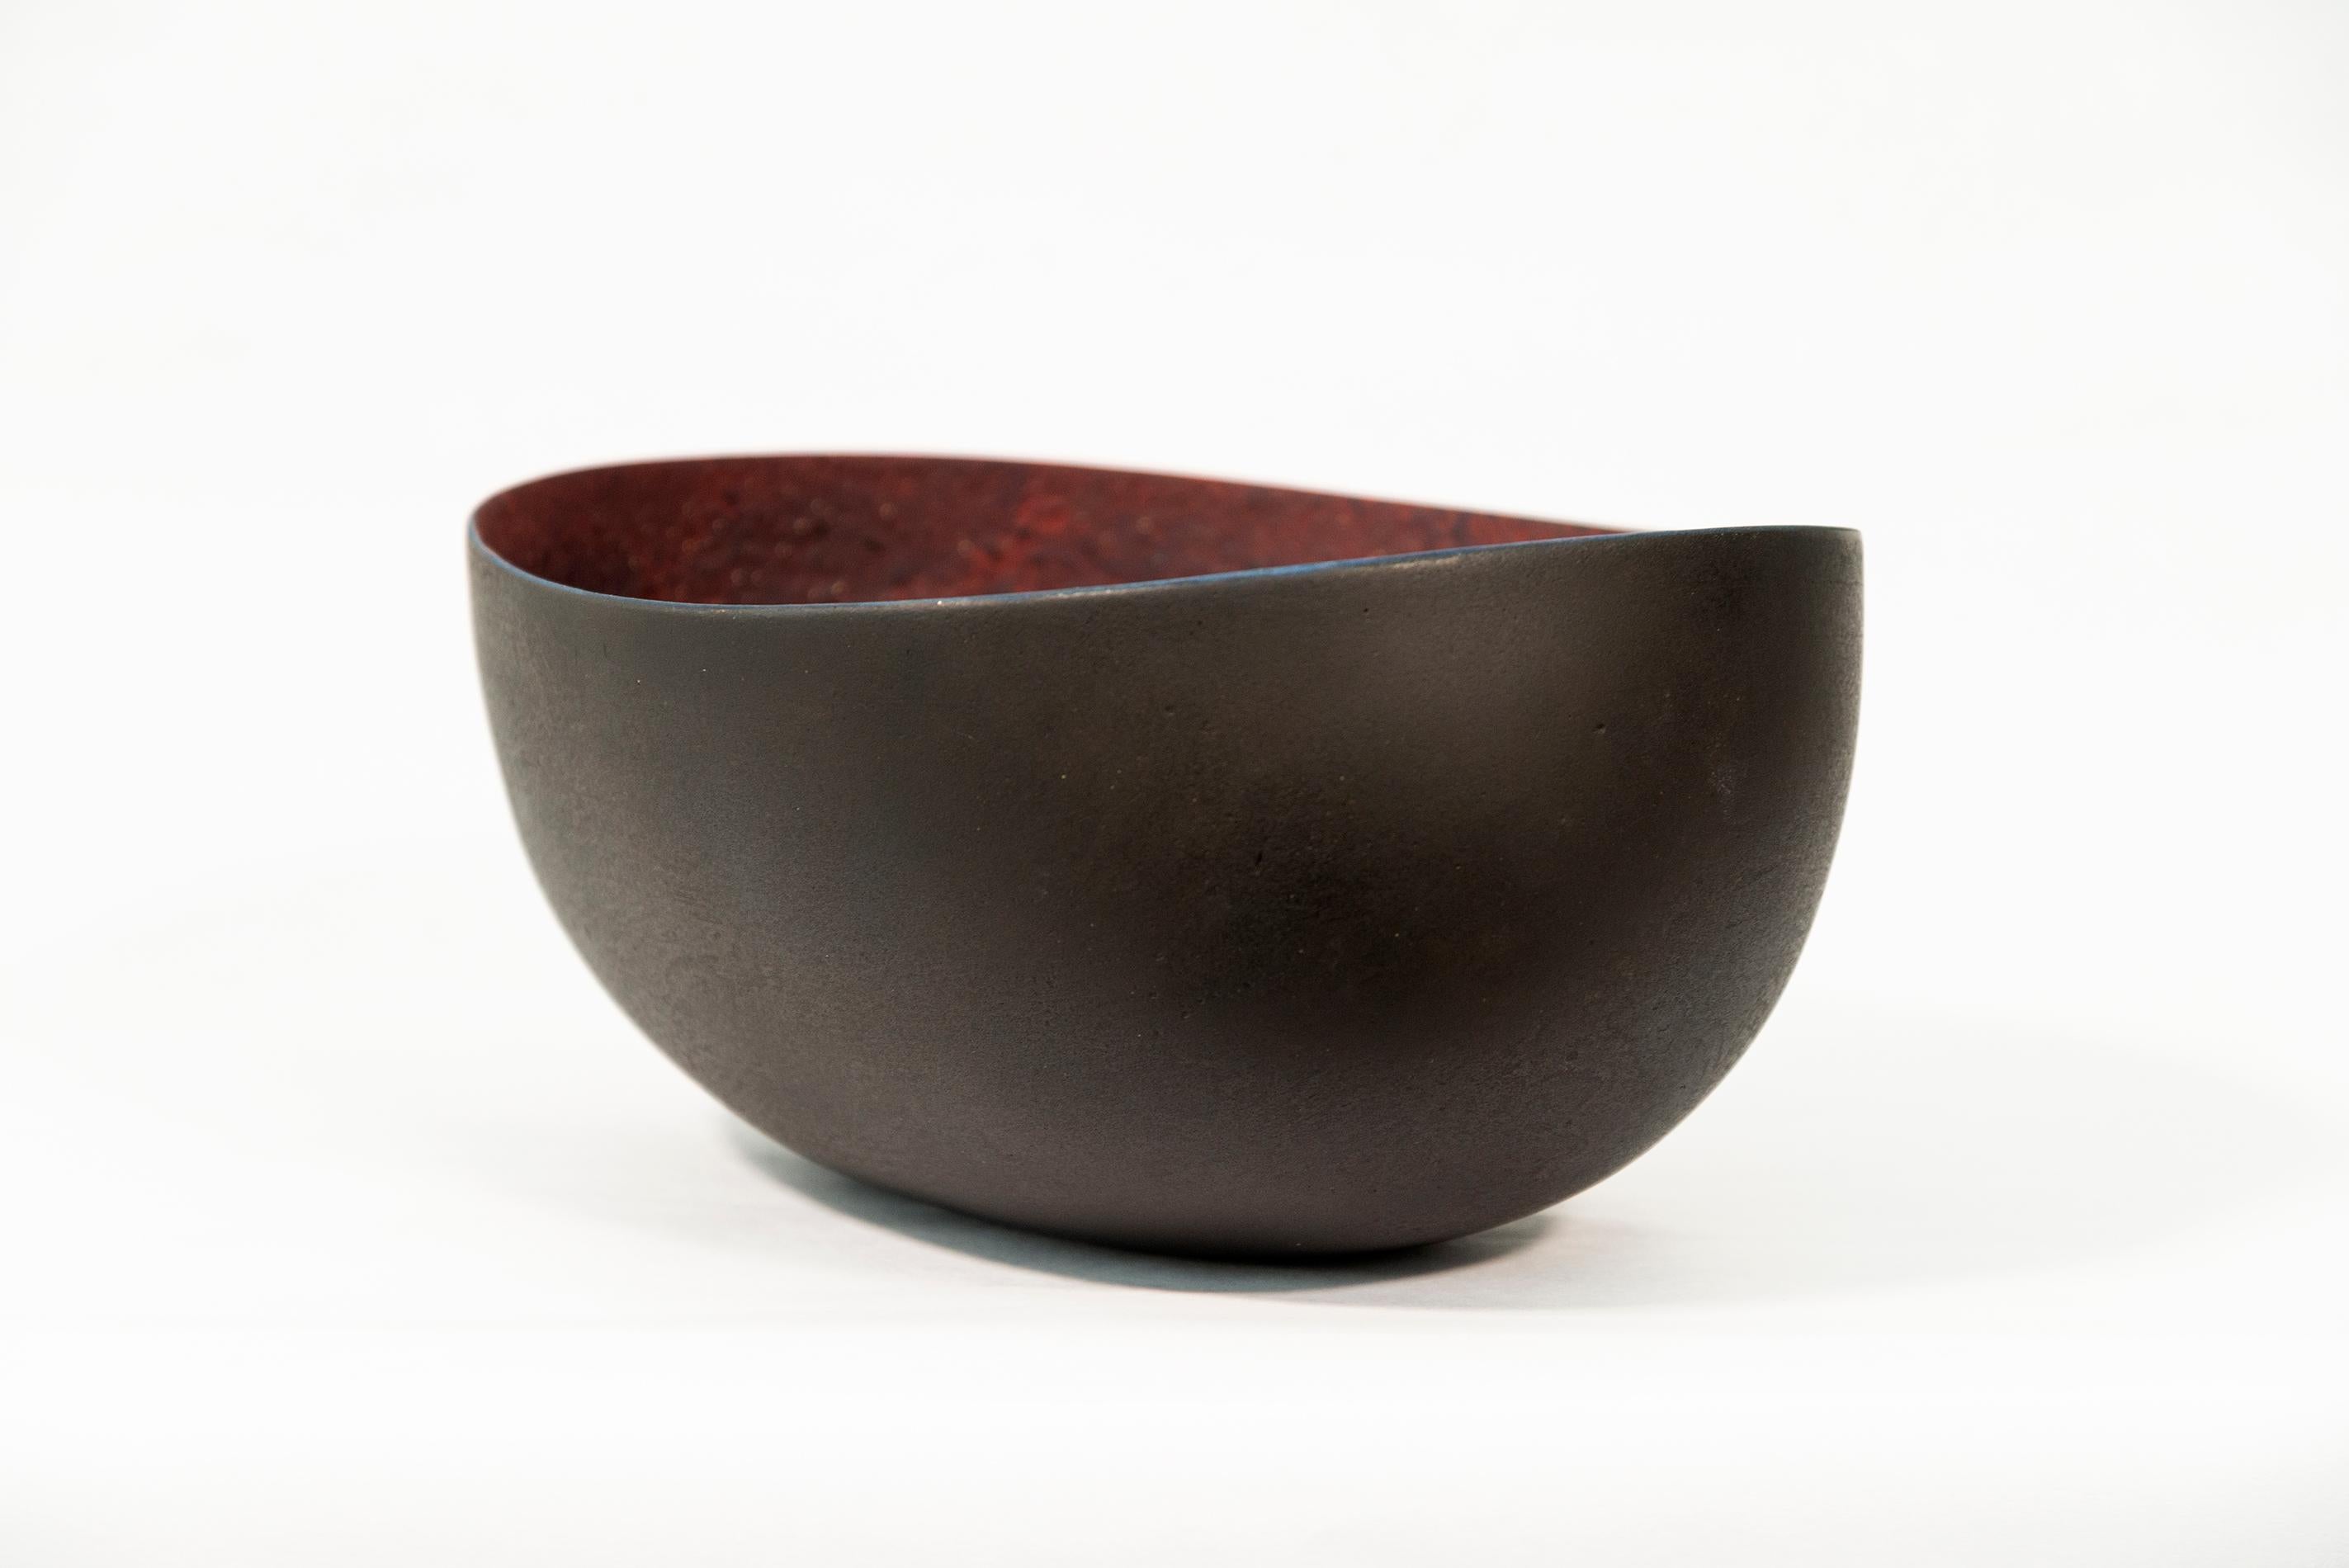 Untitled Bowl (Black) - black, red, nature inspired, textured, ceramic vessel For Sale 1